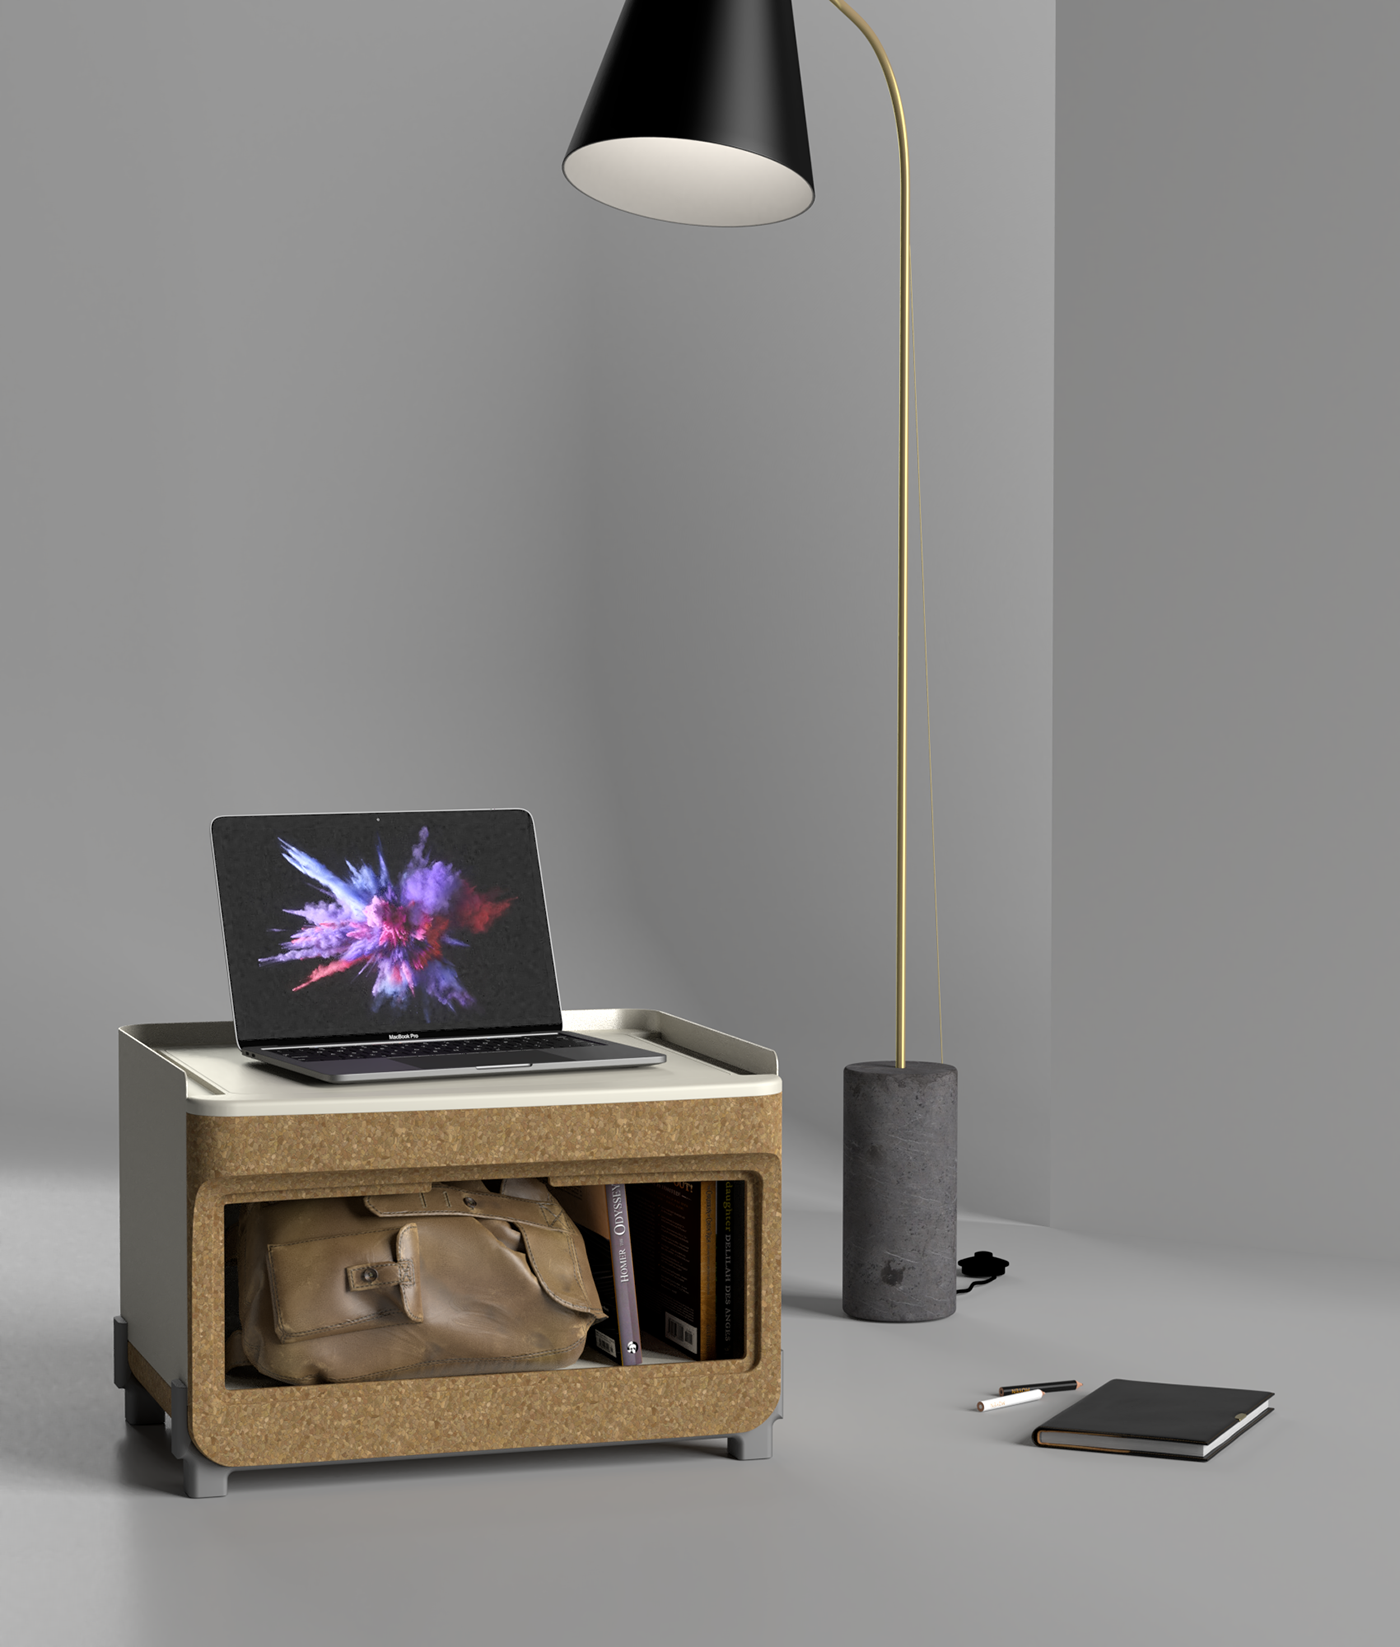 modular furniture Office table stool endtable storage cork